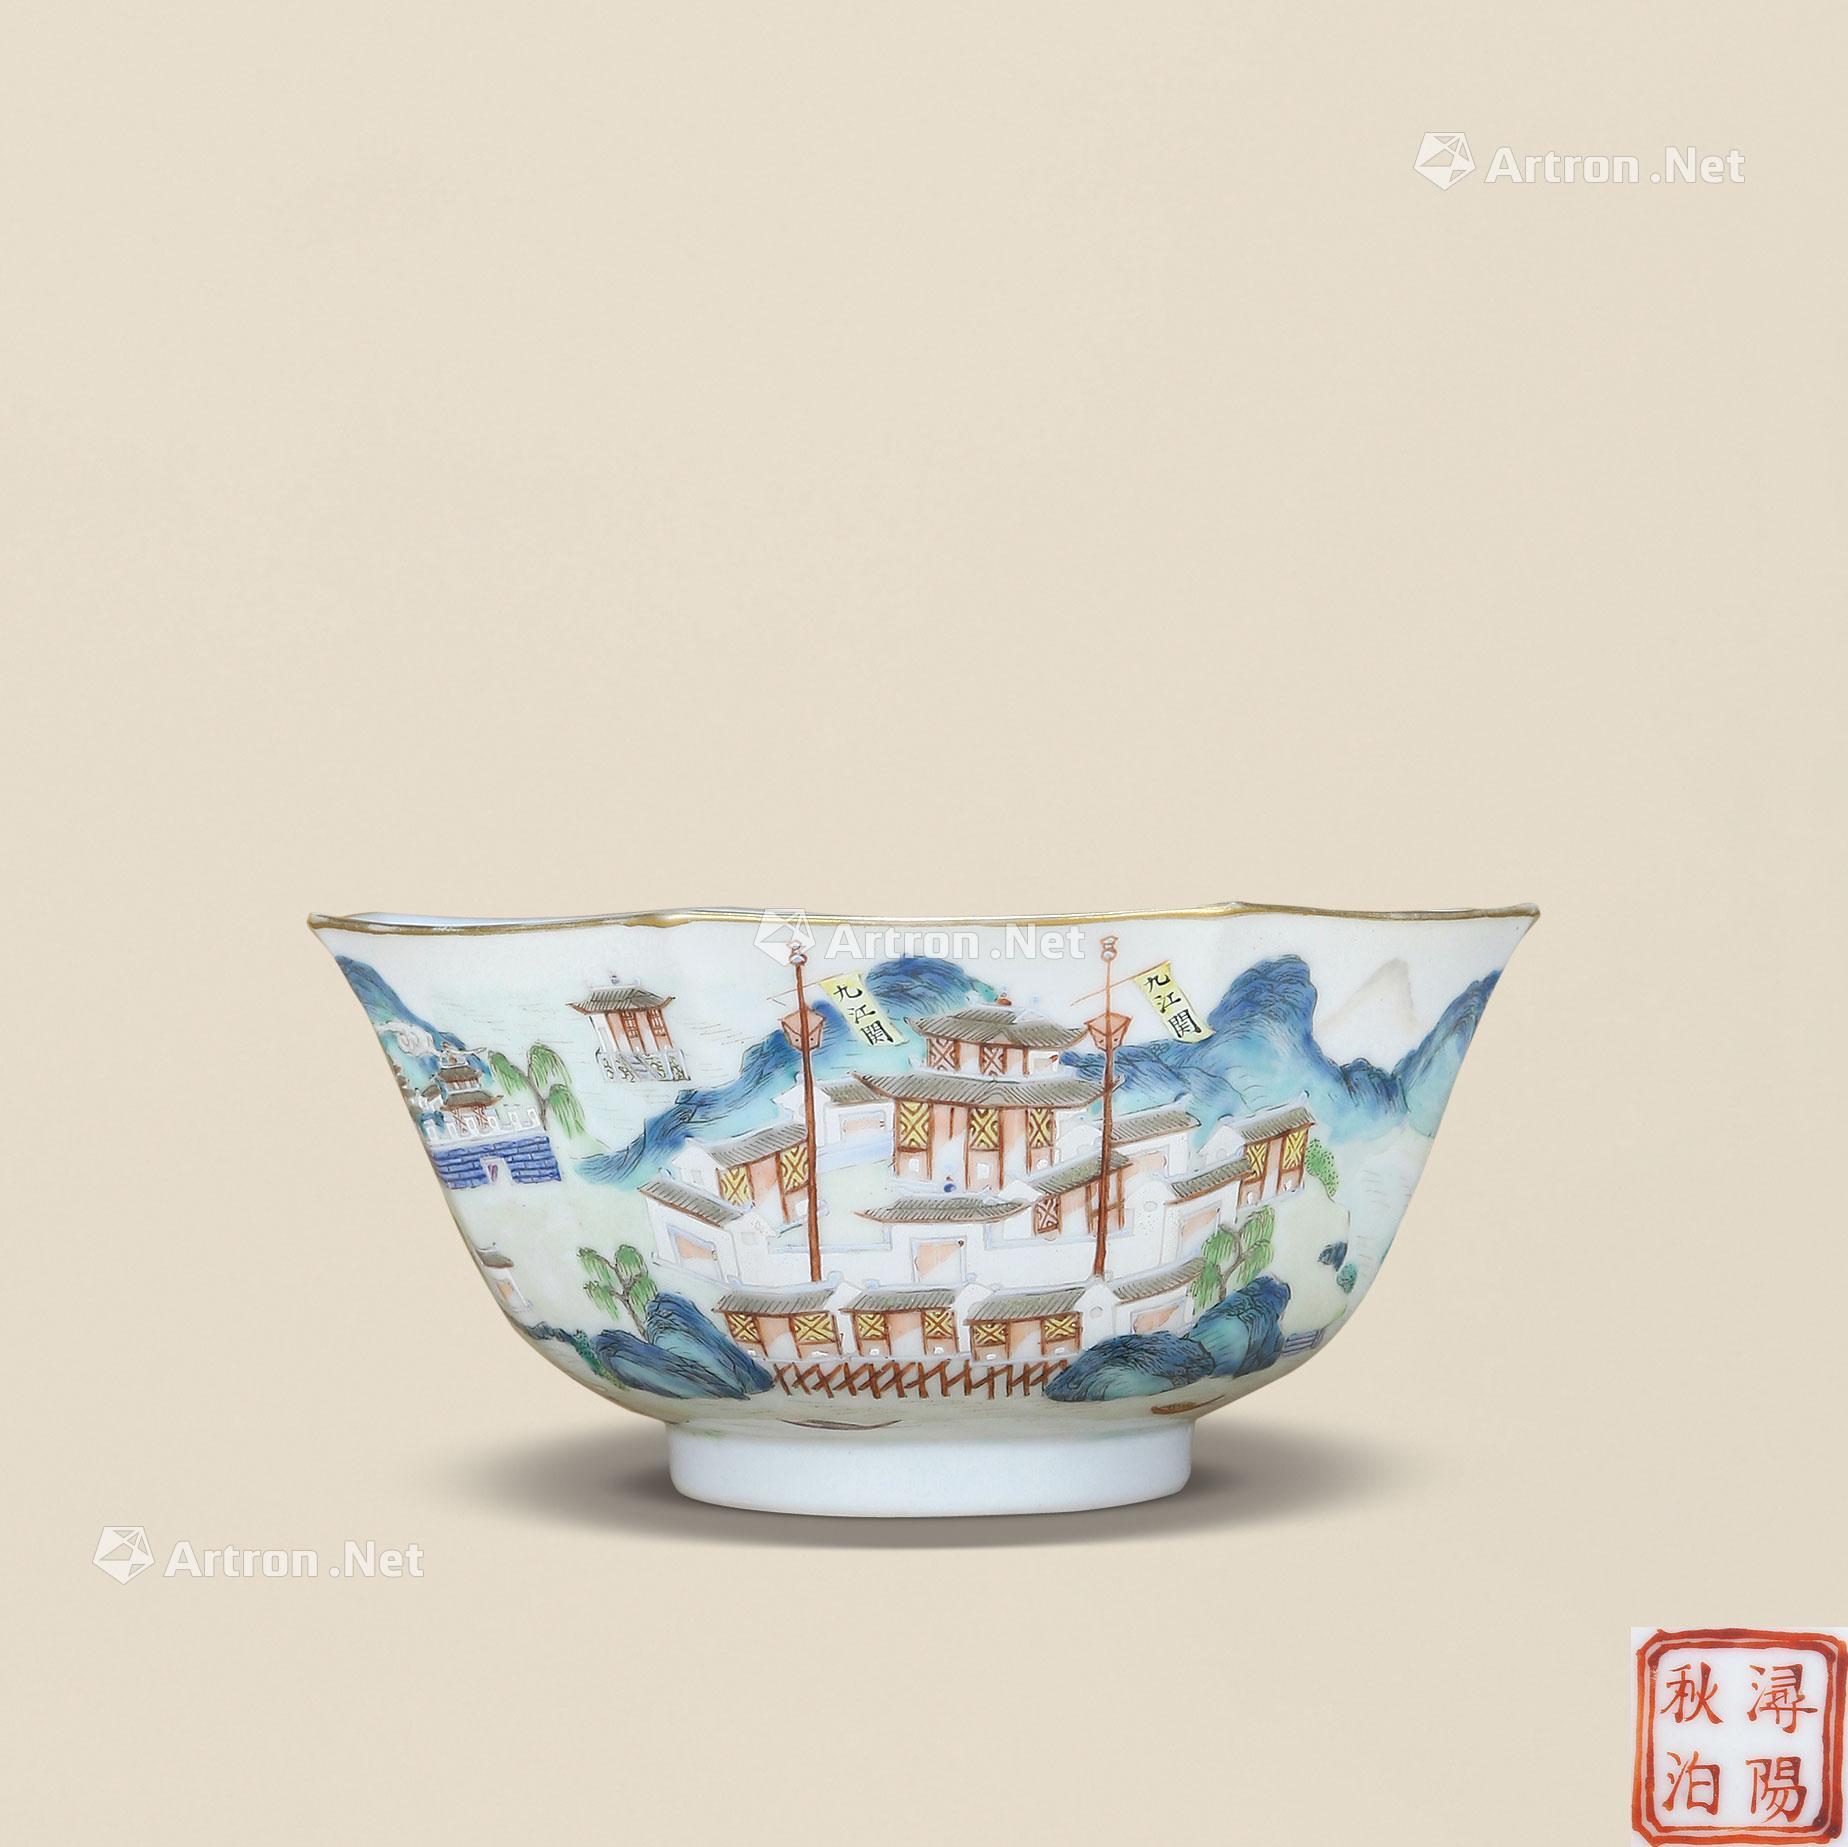 2cm 作品分类 陶瓷>清代粉彩瓷器 创作年代  清嘉庆  估价    rmb  15